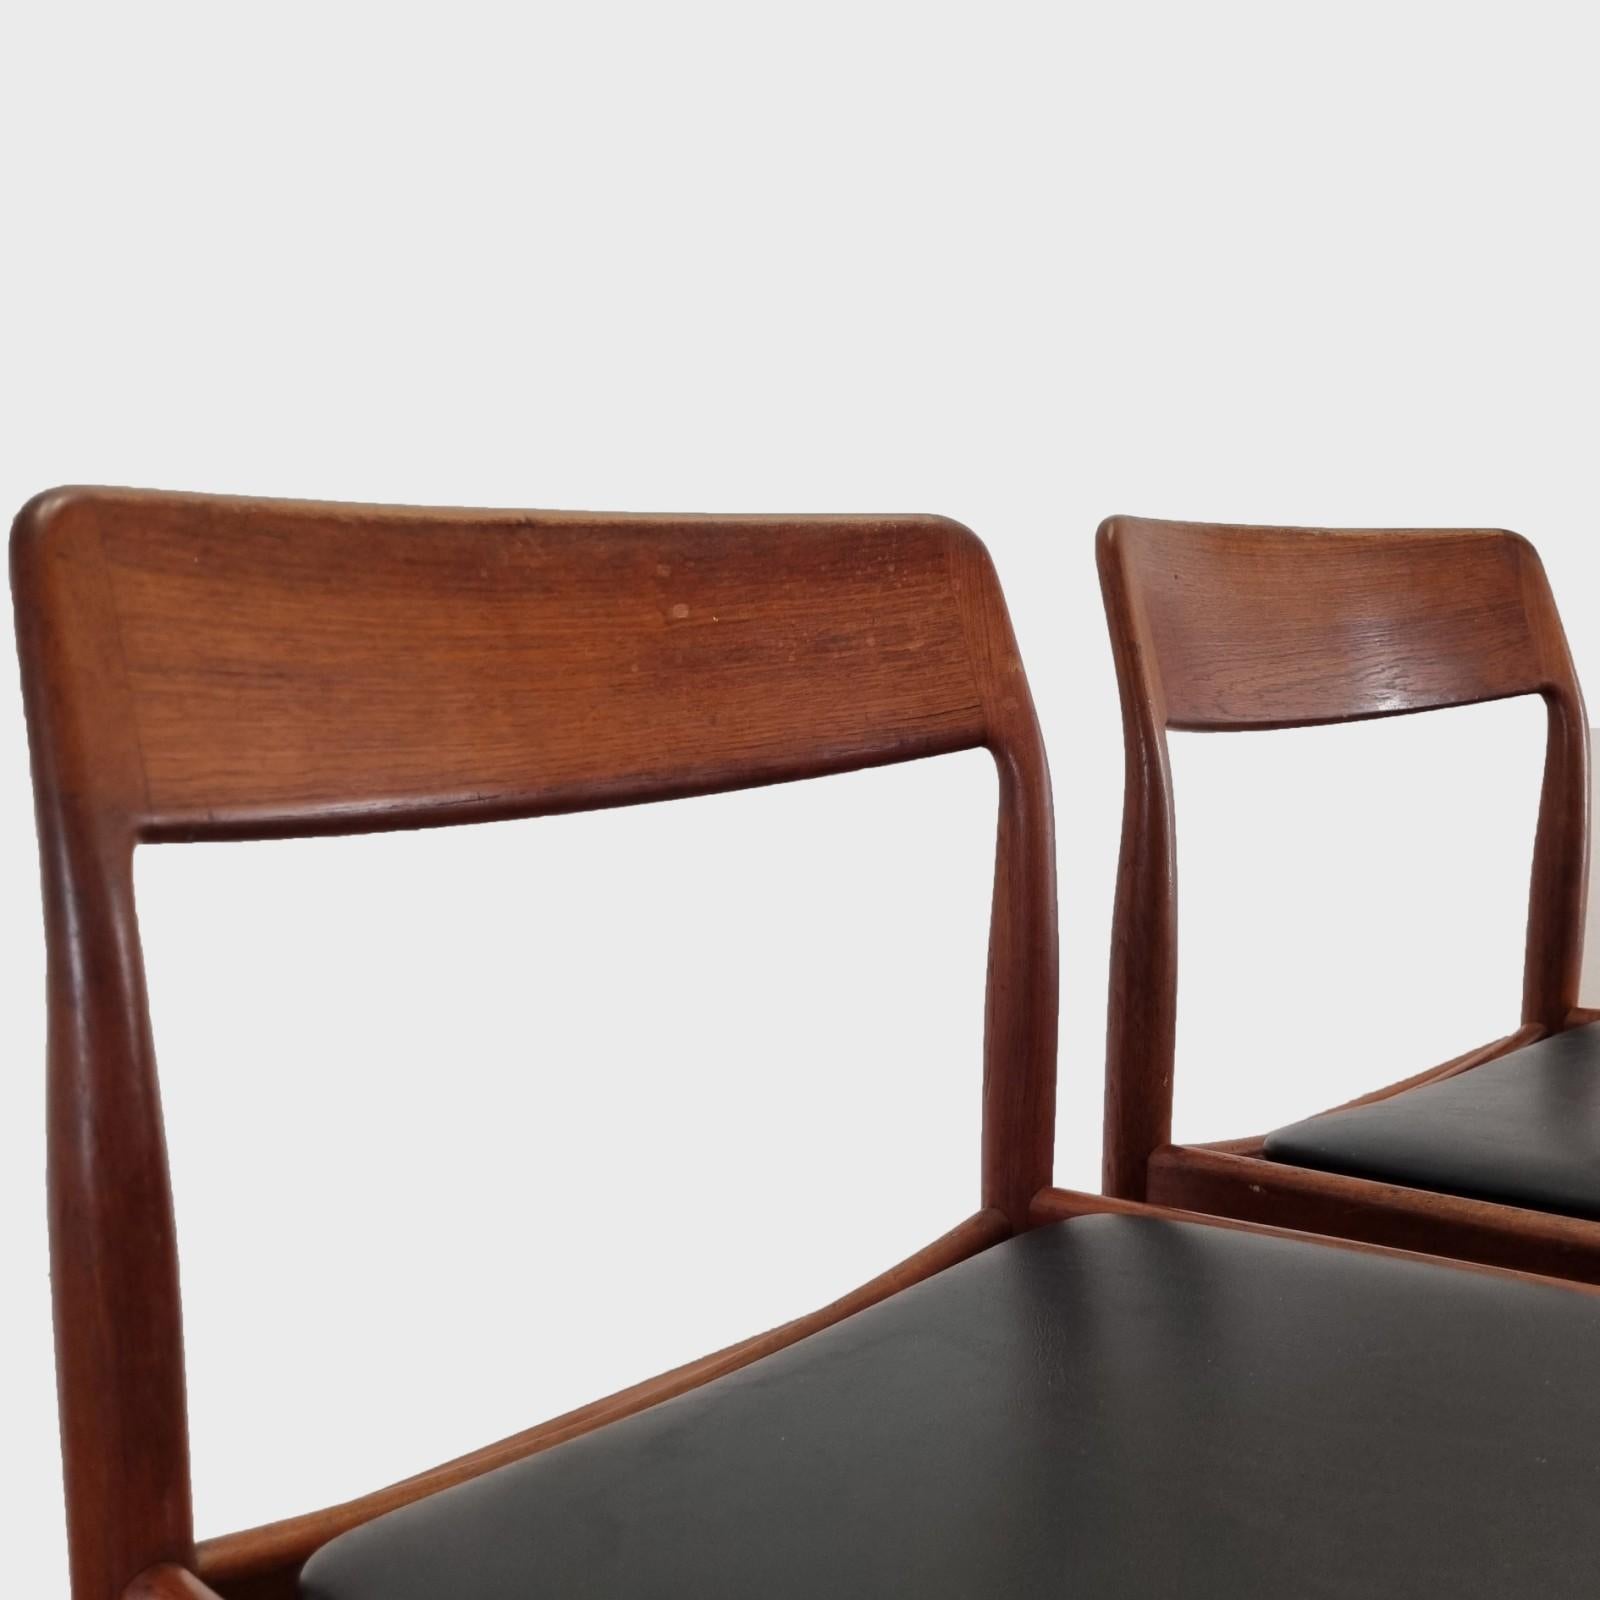 Scandinavian Modern Teak Dining Chairs, Design By Niels Otto Möller, Denmark 60s For Sale 4